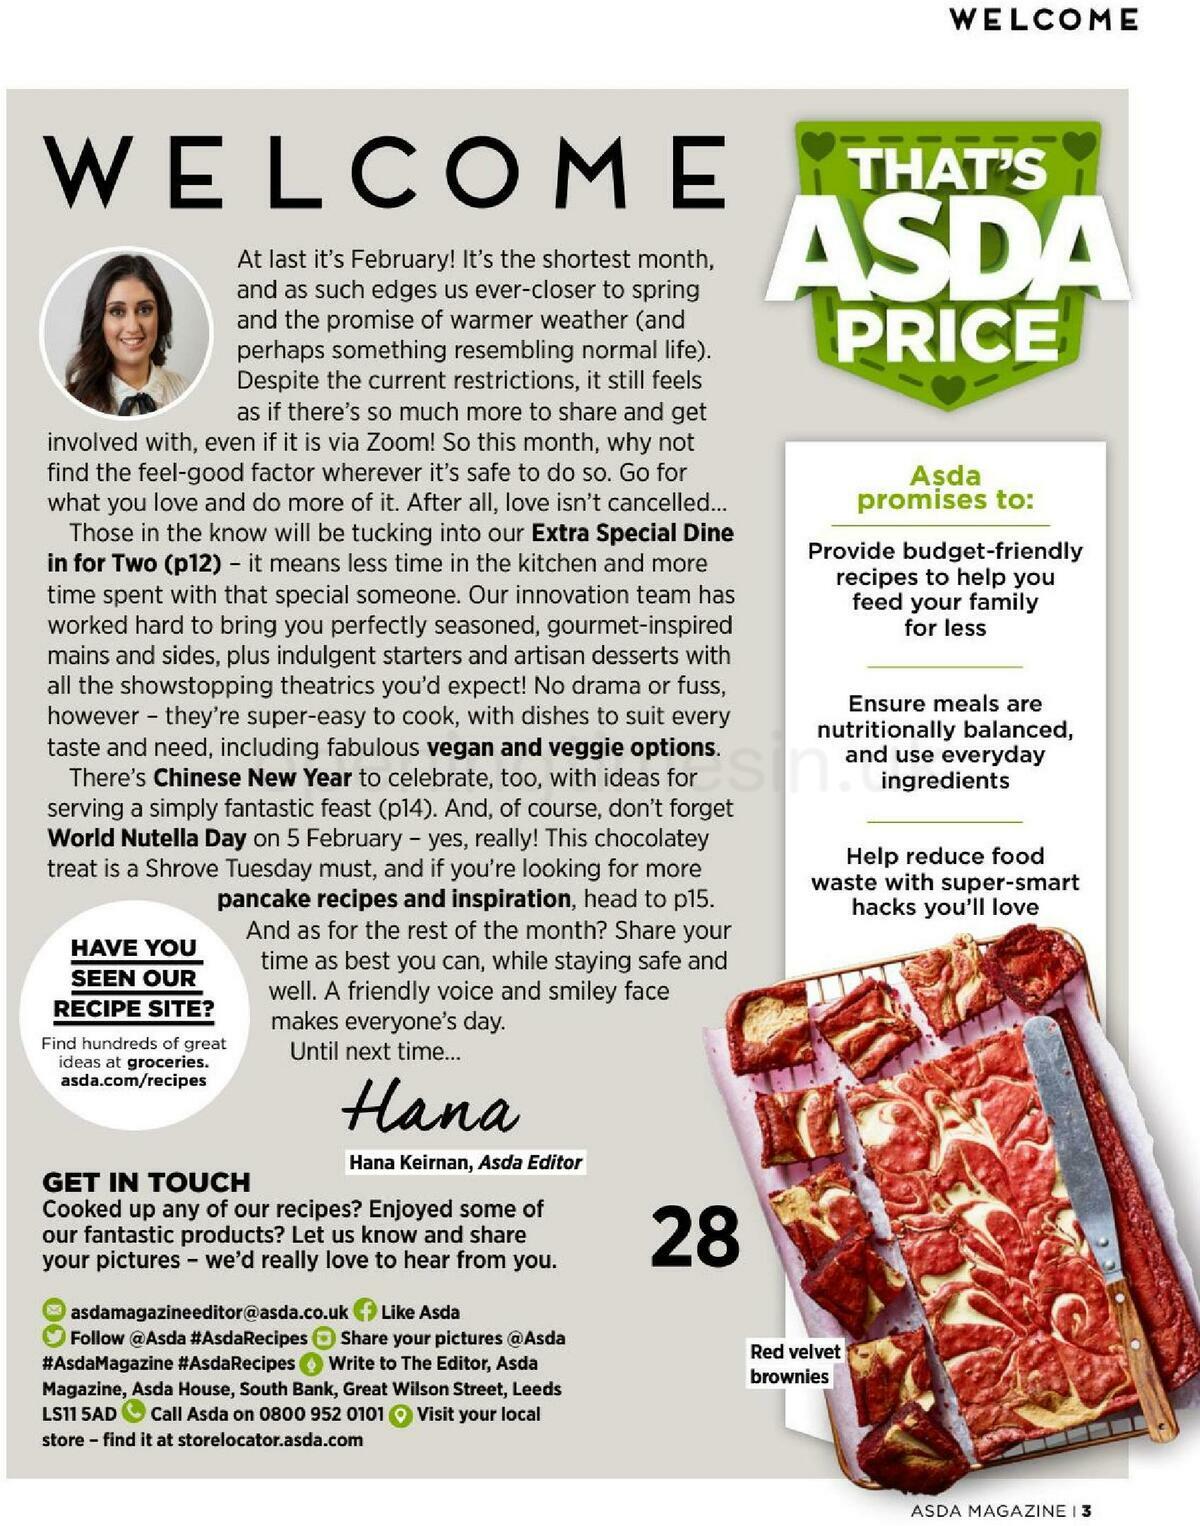 ASDA Magazine February Offers from 1 February